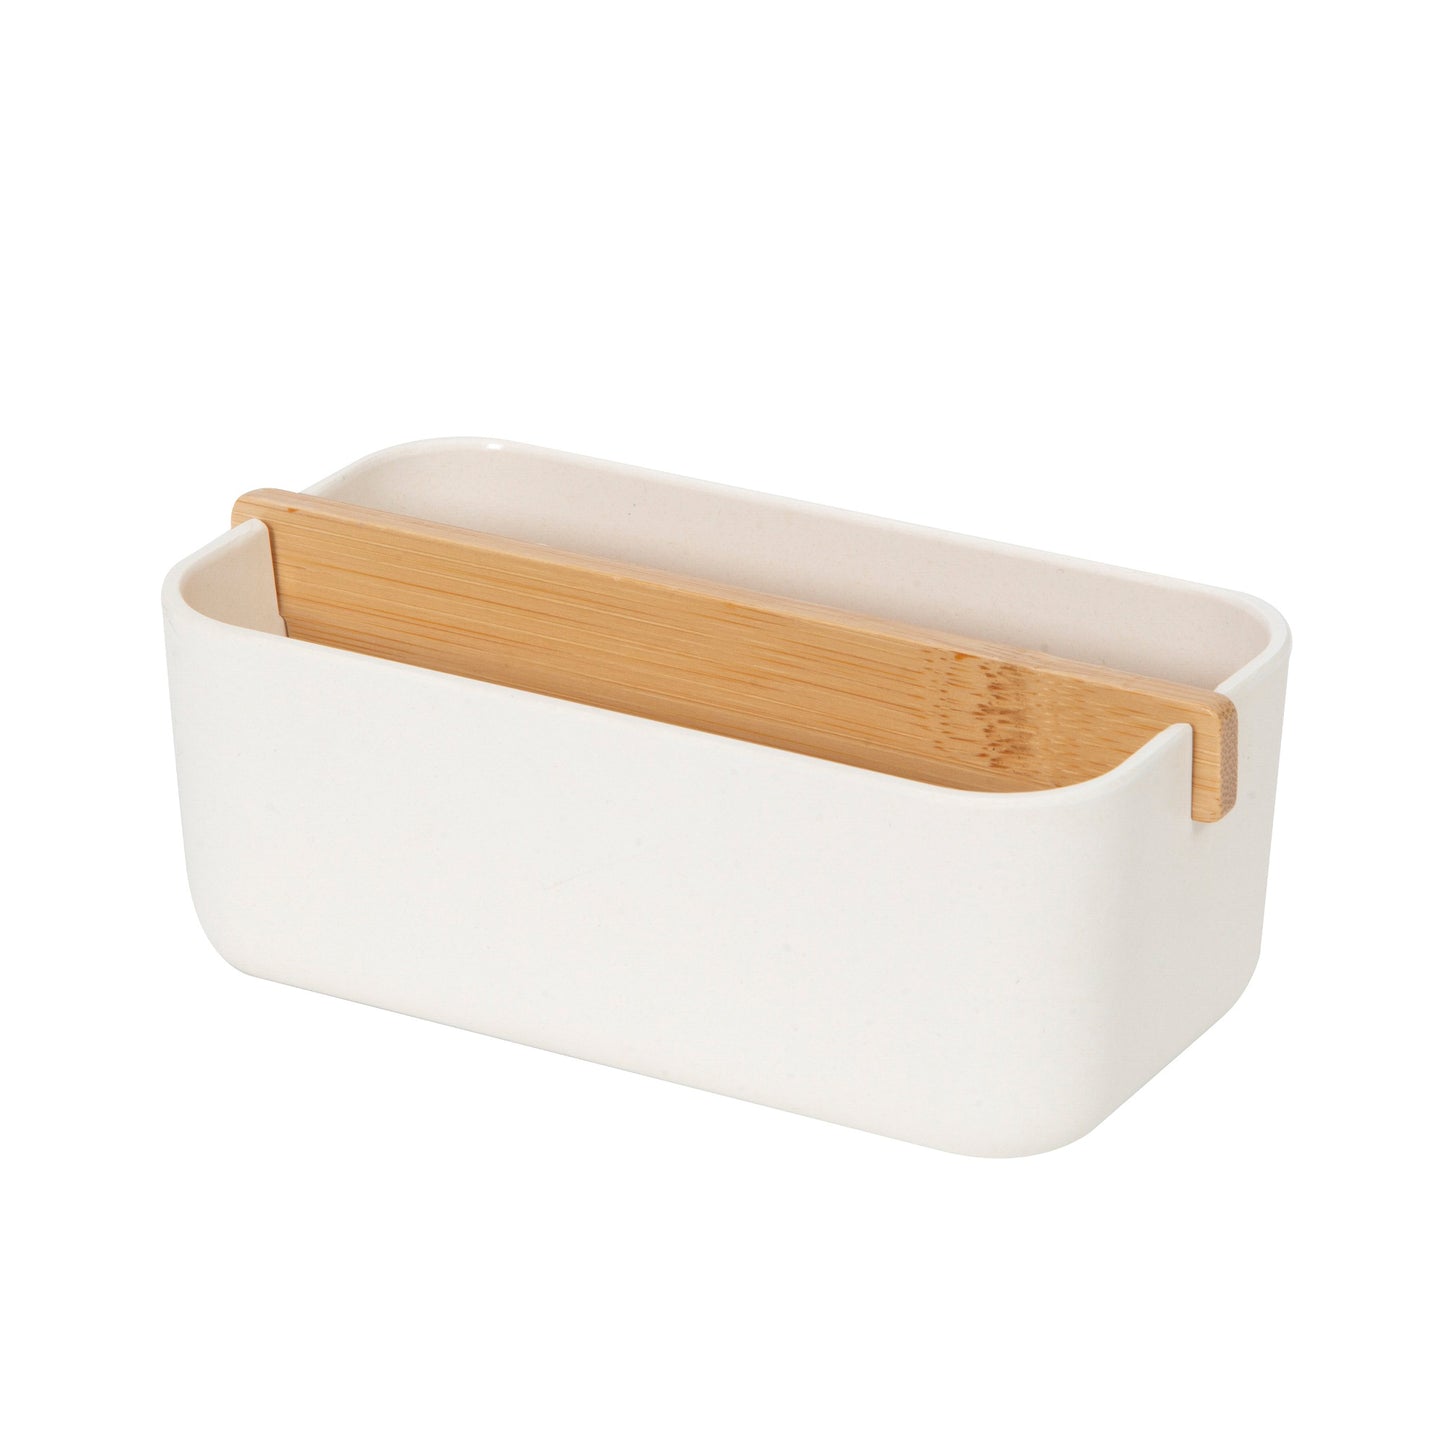 Caja de almacenaje de 2 compartimentos en fibra de bambú Ecologik blanca y natural